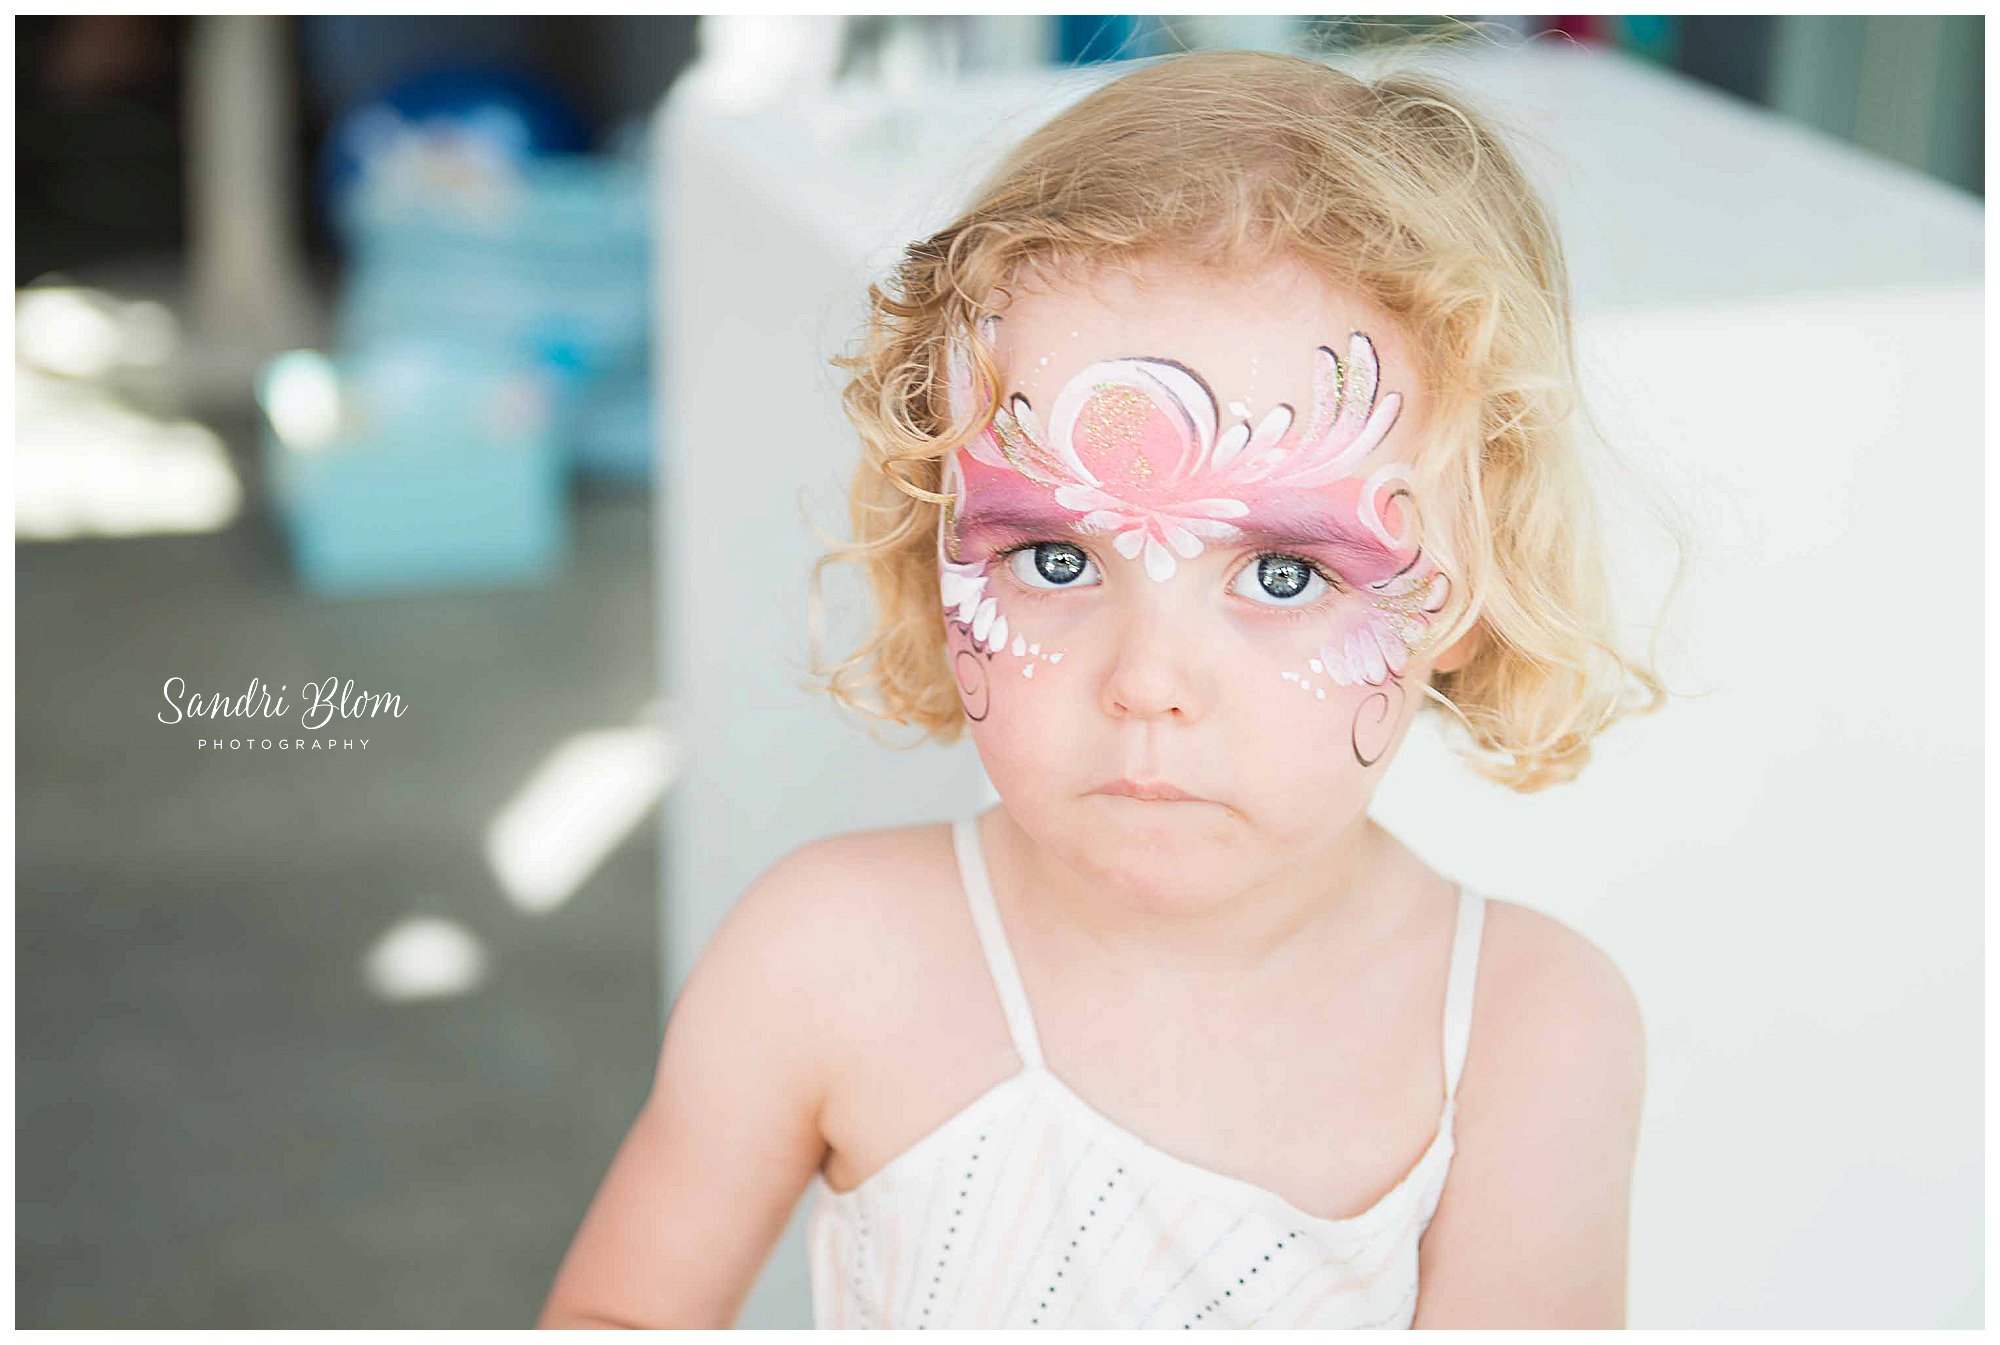 Frozen Kids Birthday Party captured by Sandri Blom Photography